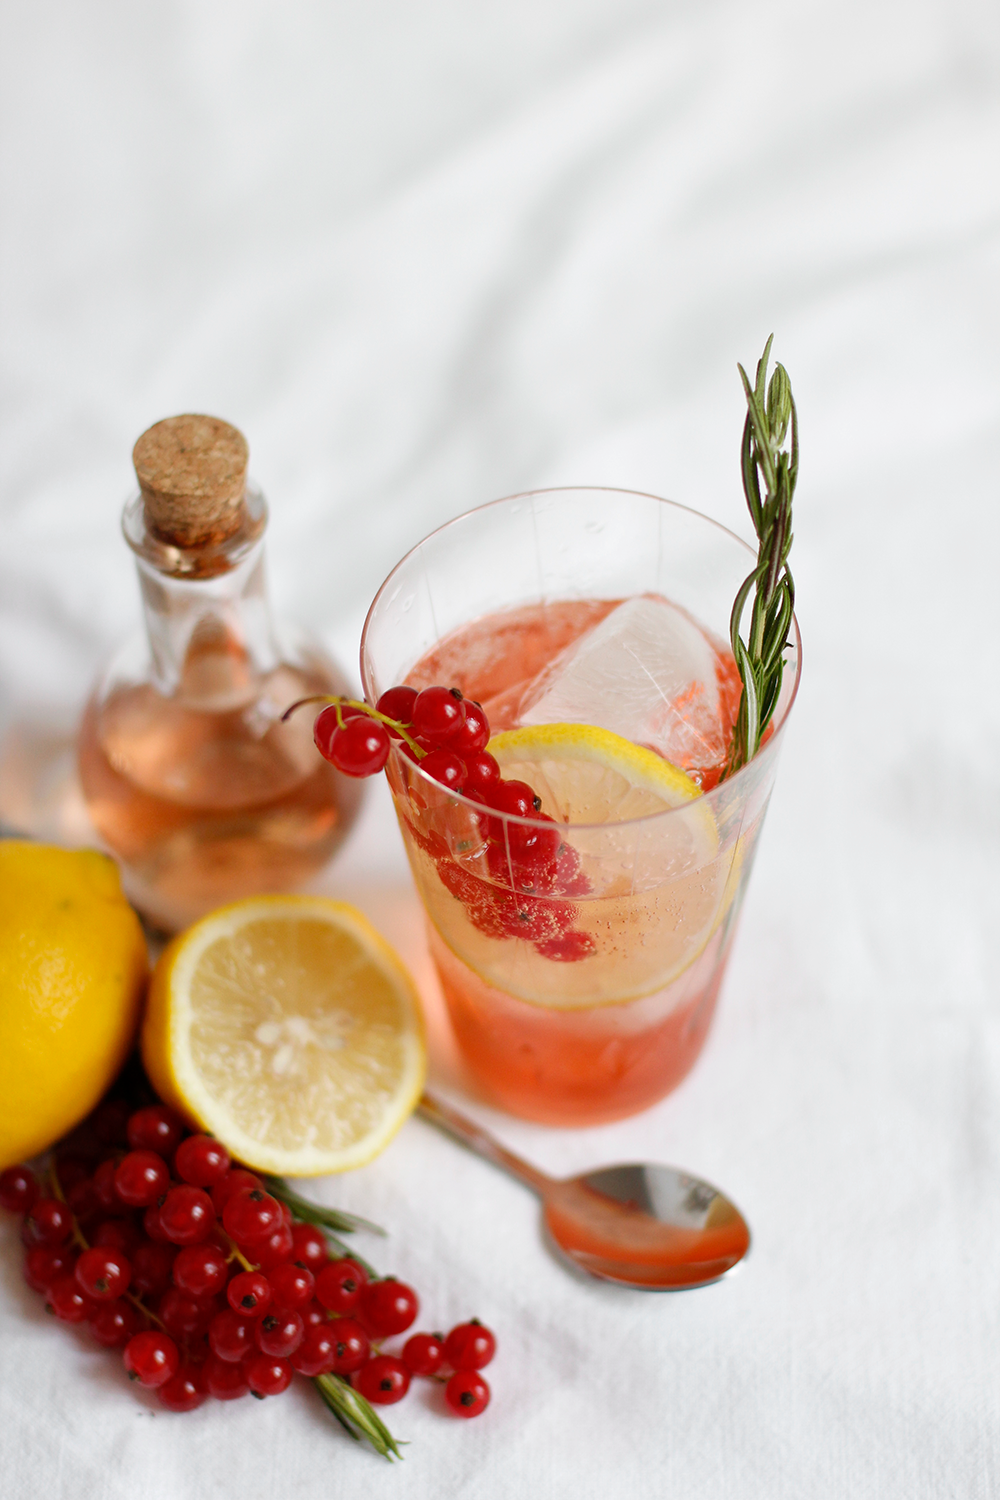 Drink: Ribisel-Cocktail mit Ramazzotti Rosato und infused Ging | we love handmade